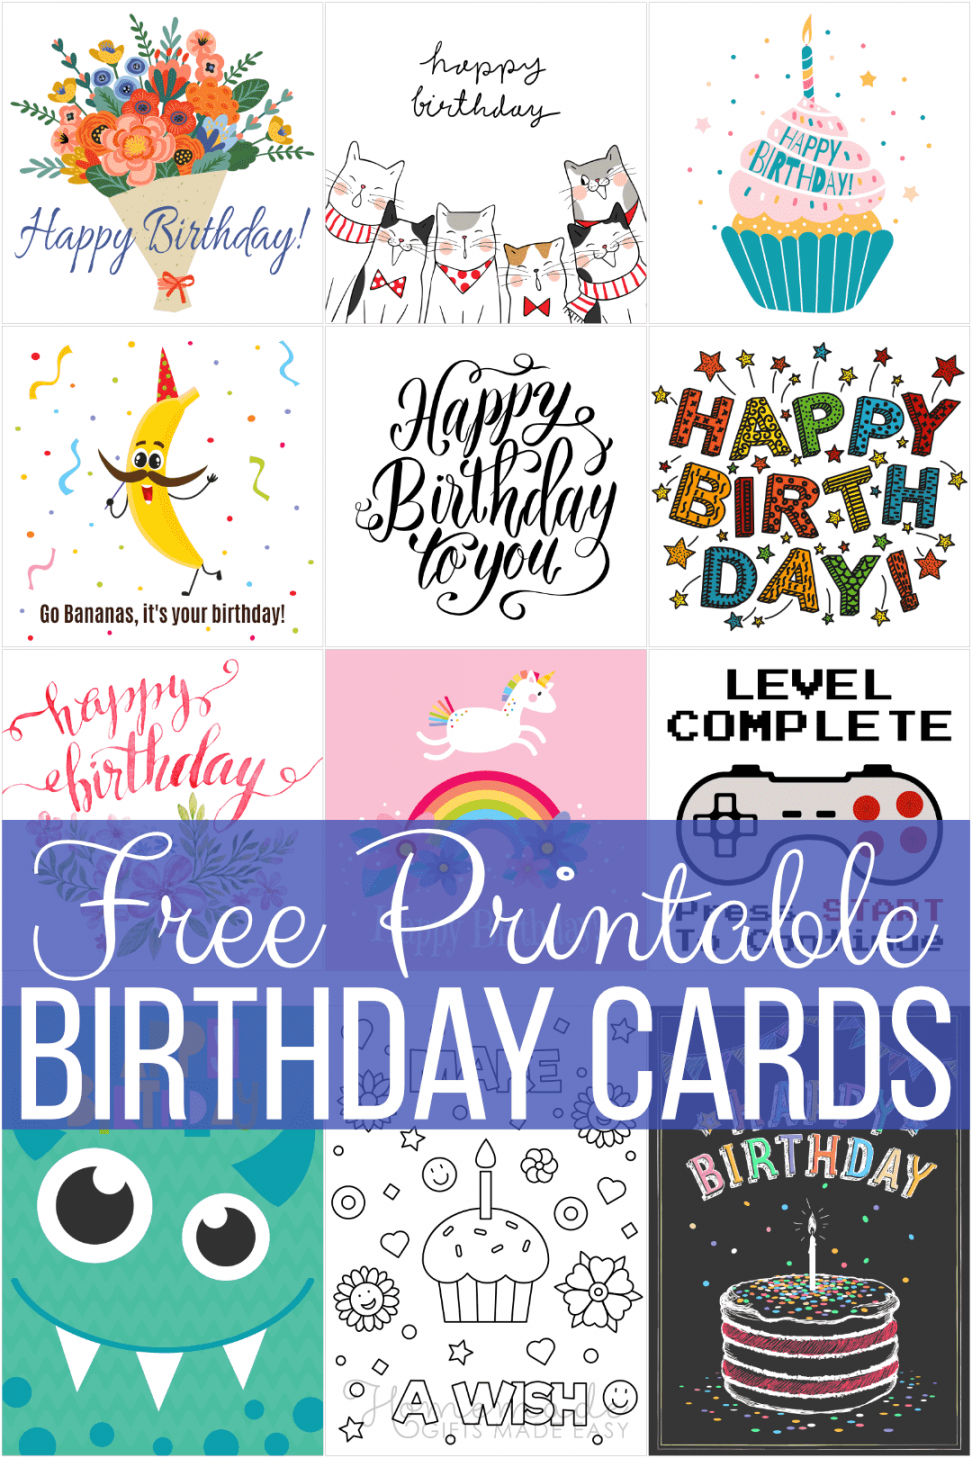 Birthday Cards Printable Free - Printable - Free Printable Birthday Cards for Everyone